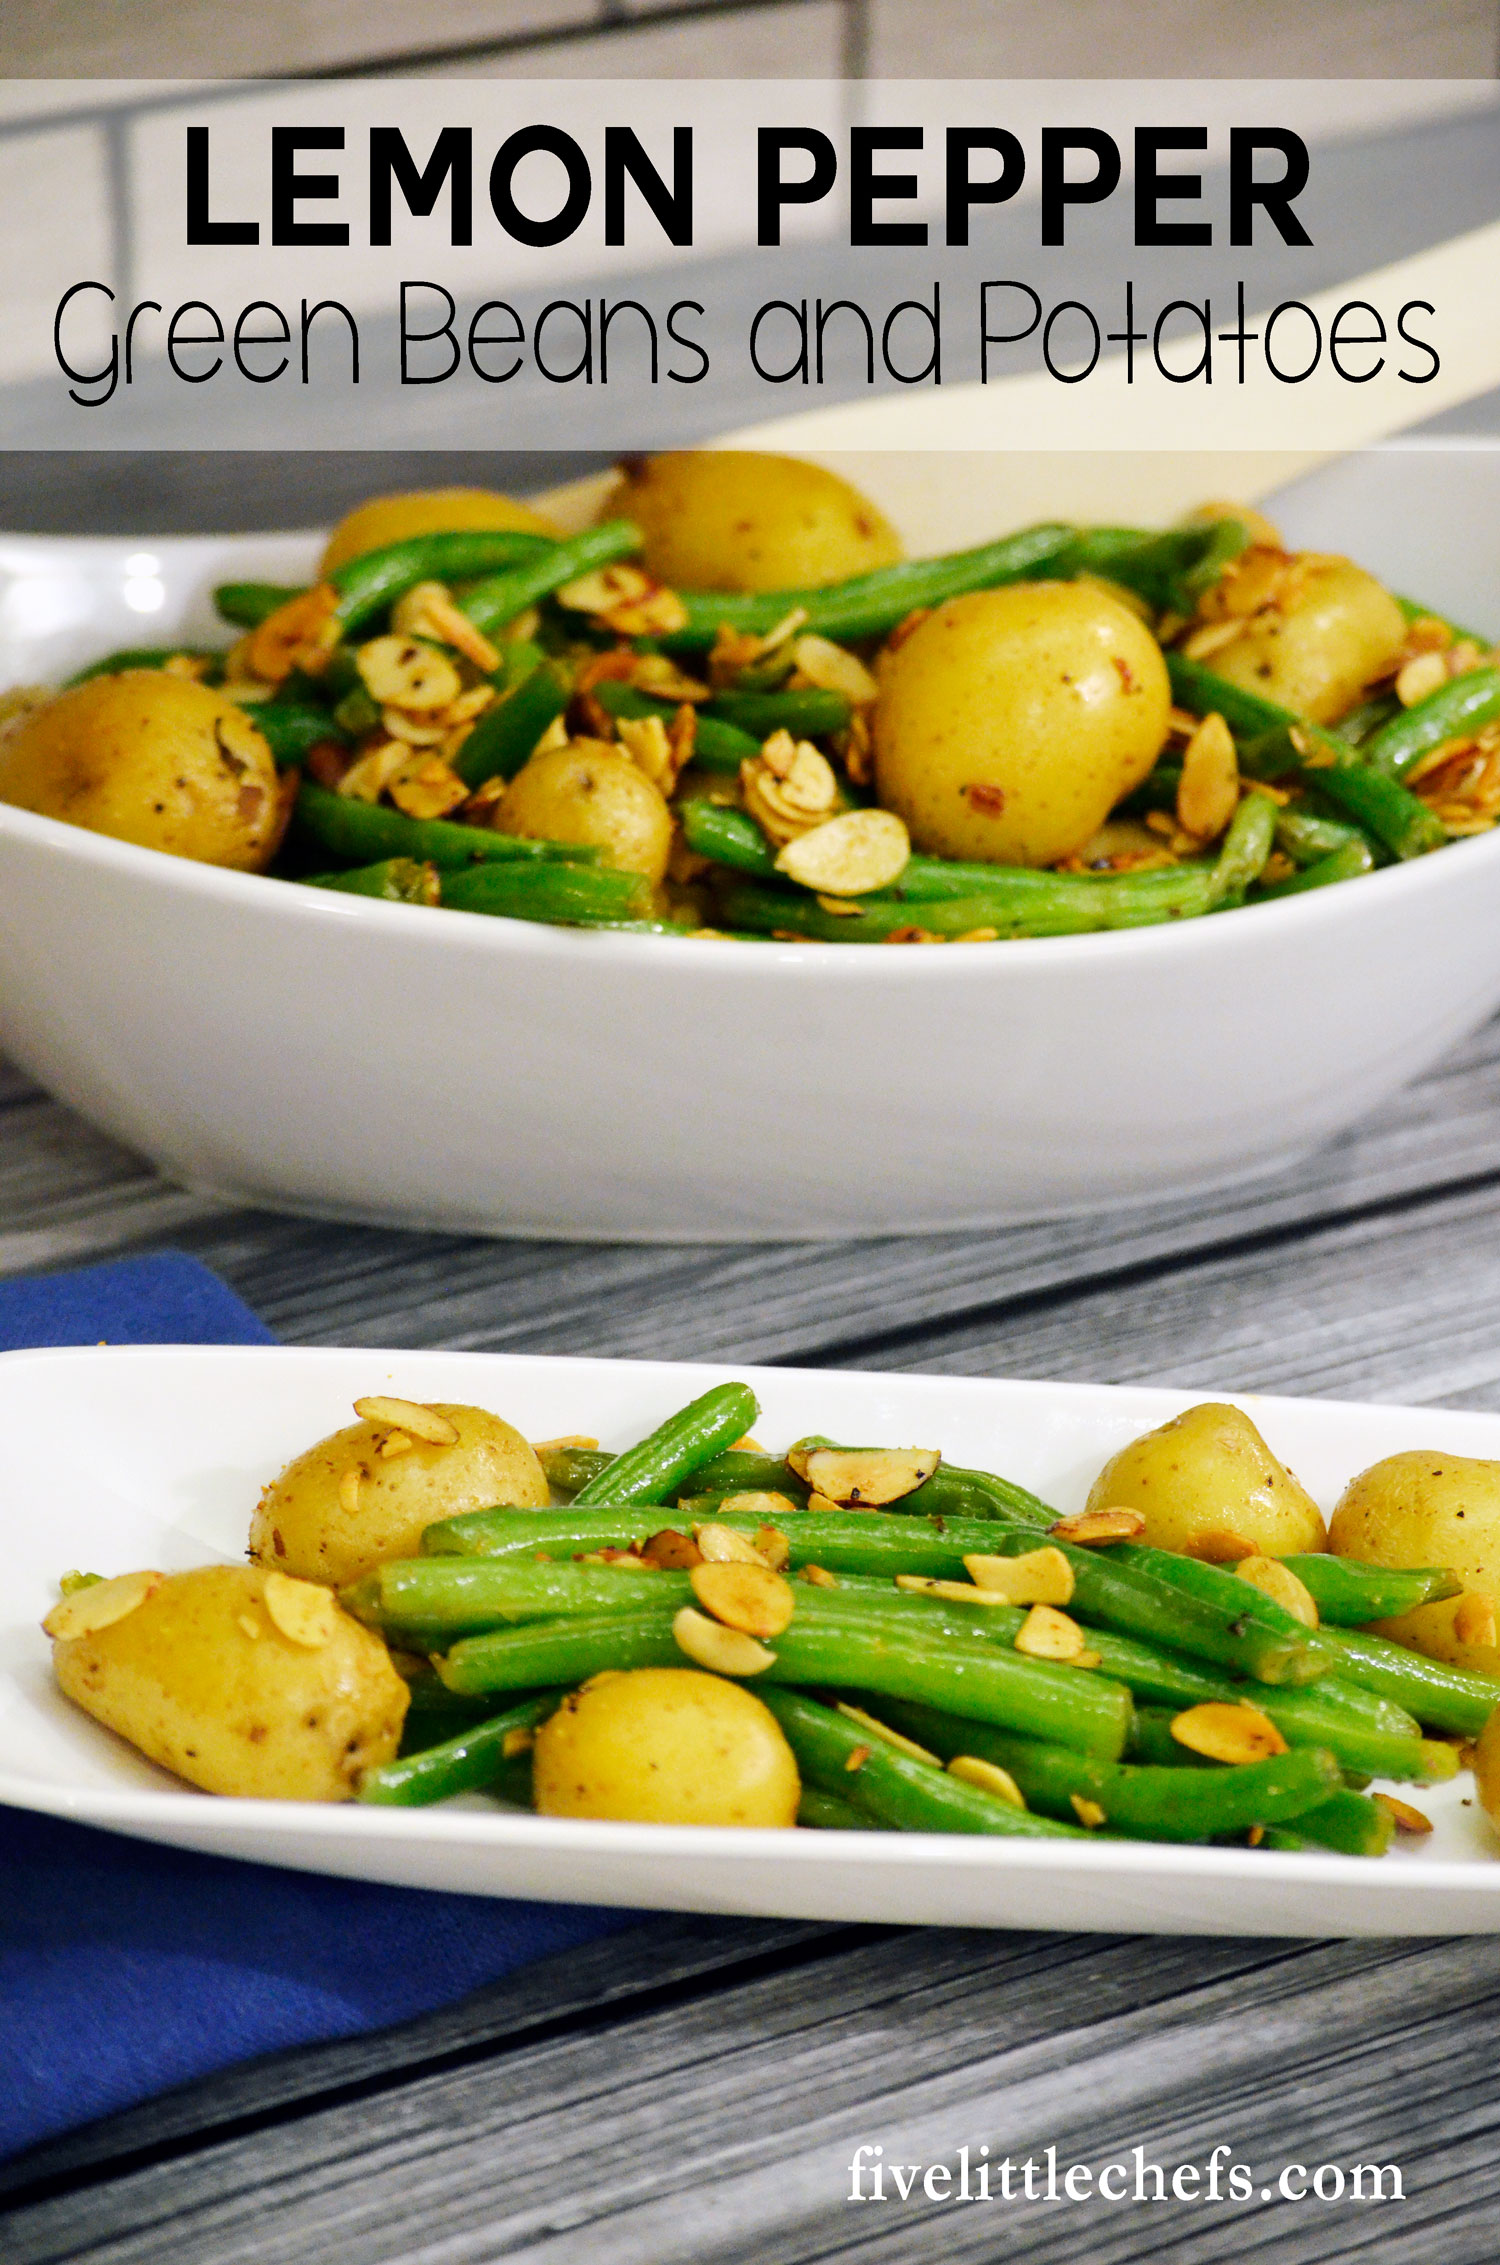 Lemon Pepper Green Beans and Potatoes | Five Little Chefs